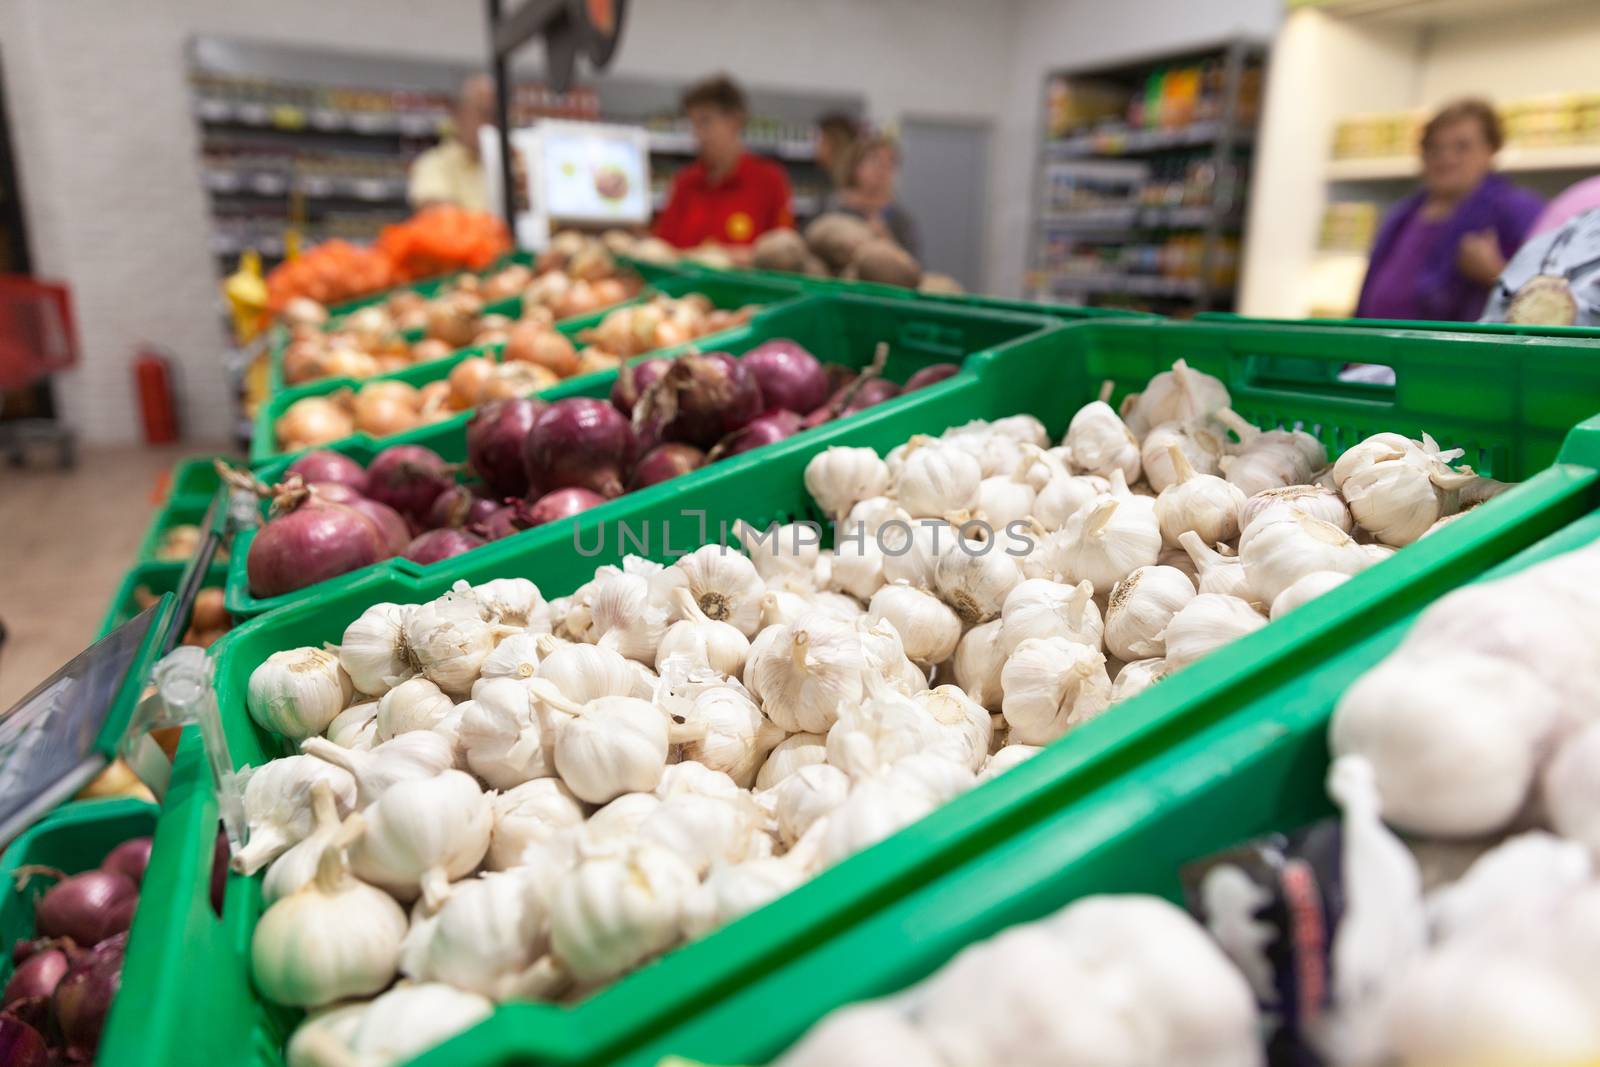 Garlic on supermarket vegetable shelf, blurred buyers in the background